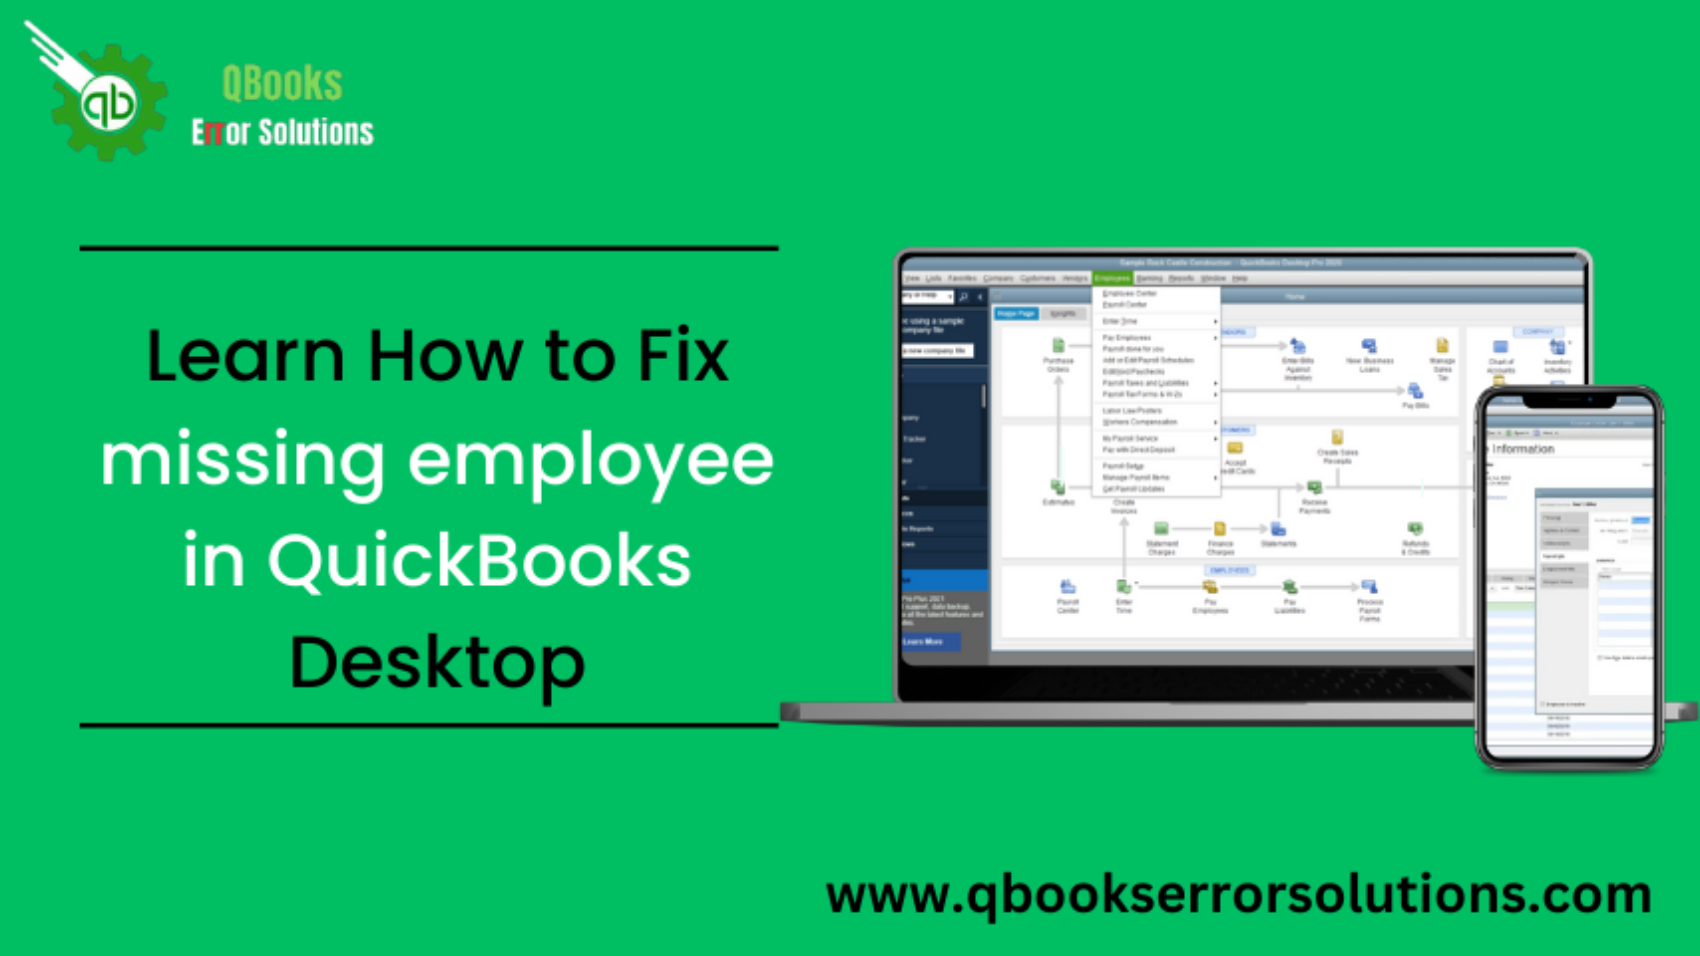 Learn how to fix missing employee in QuickBooks Desktop